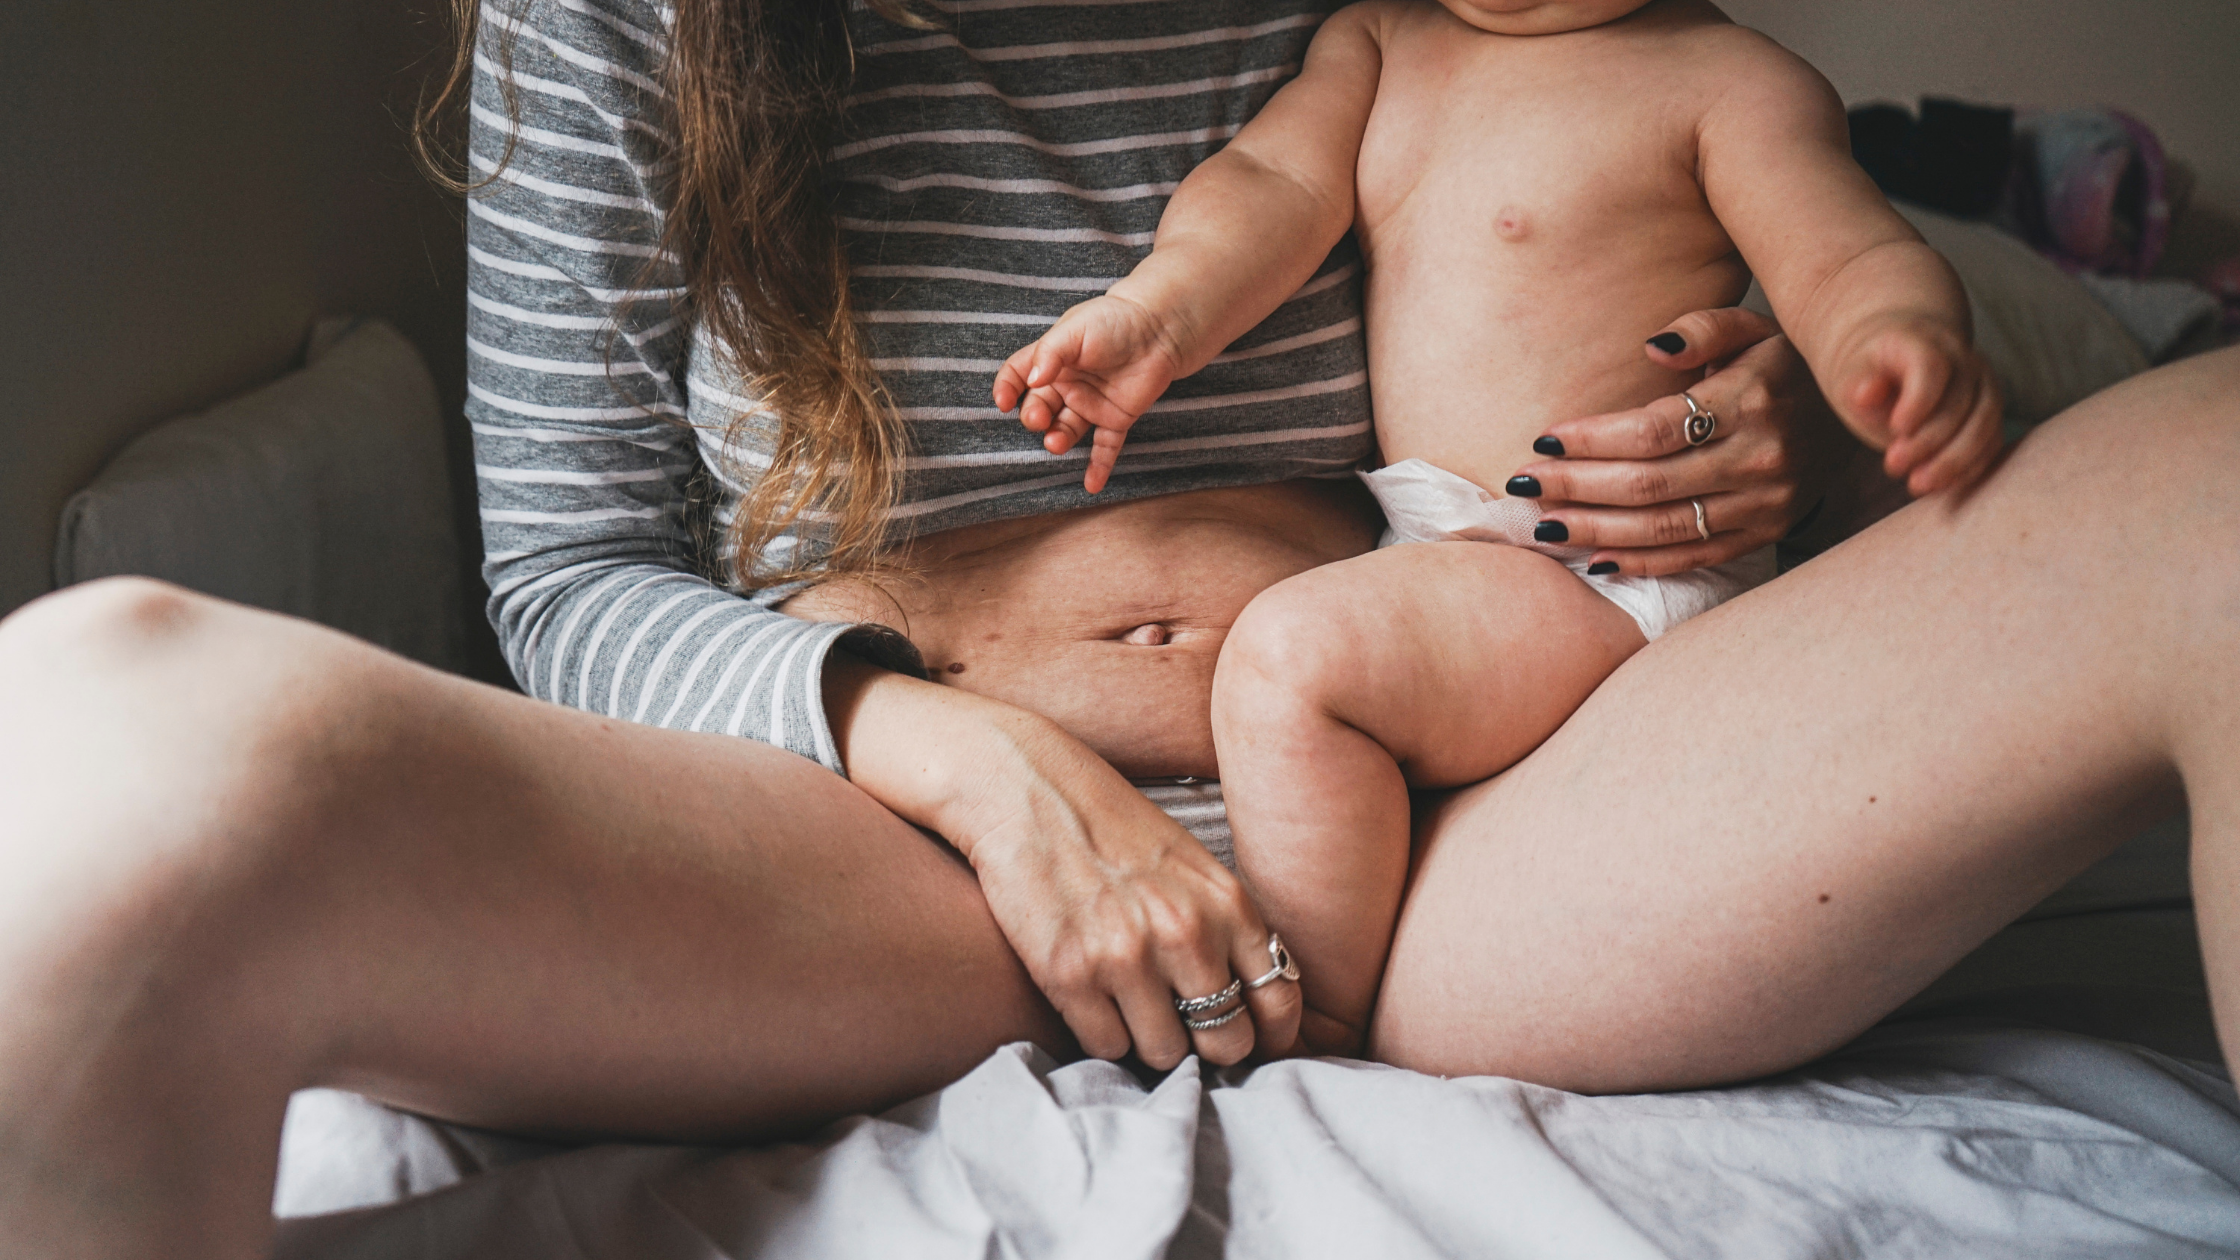 Experiencing Motherhood the Way We All Deserve